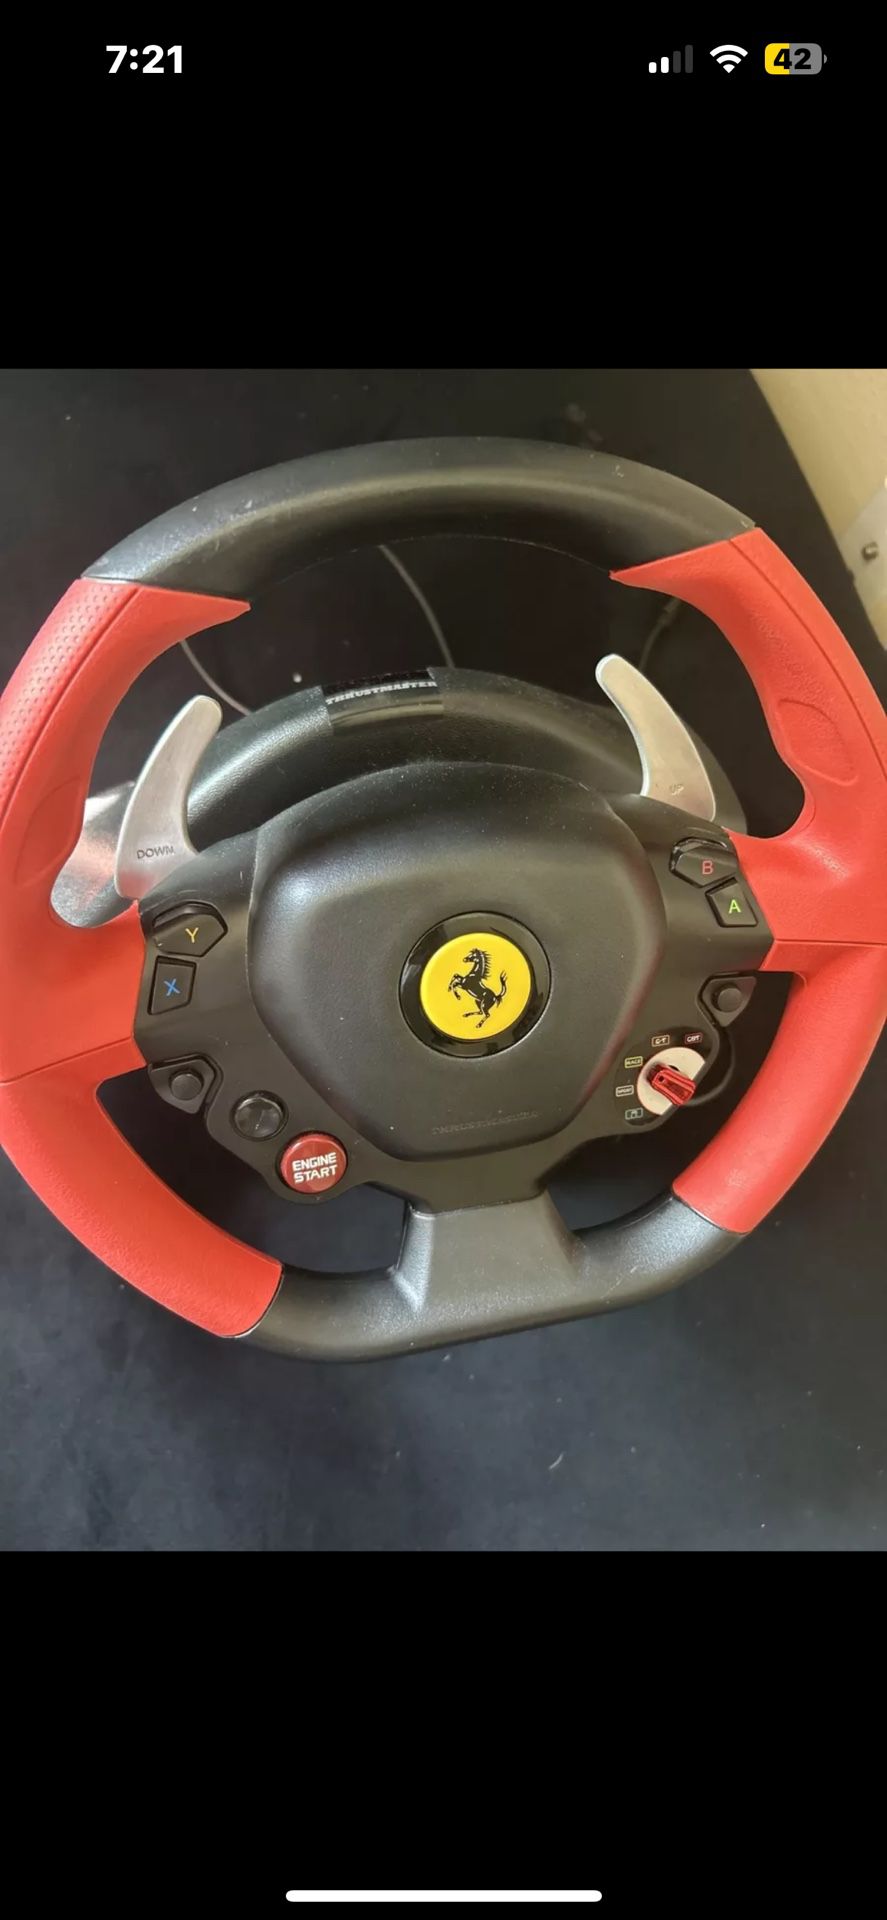 Thrust Master Ferrari 458 Spider Wheel And Pedels